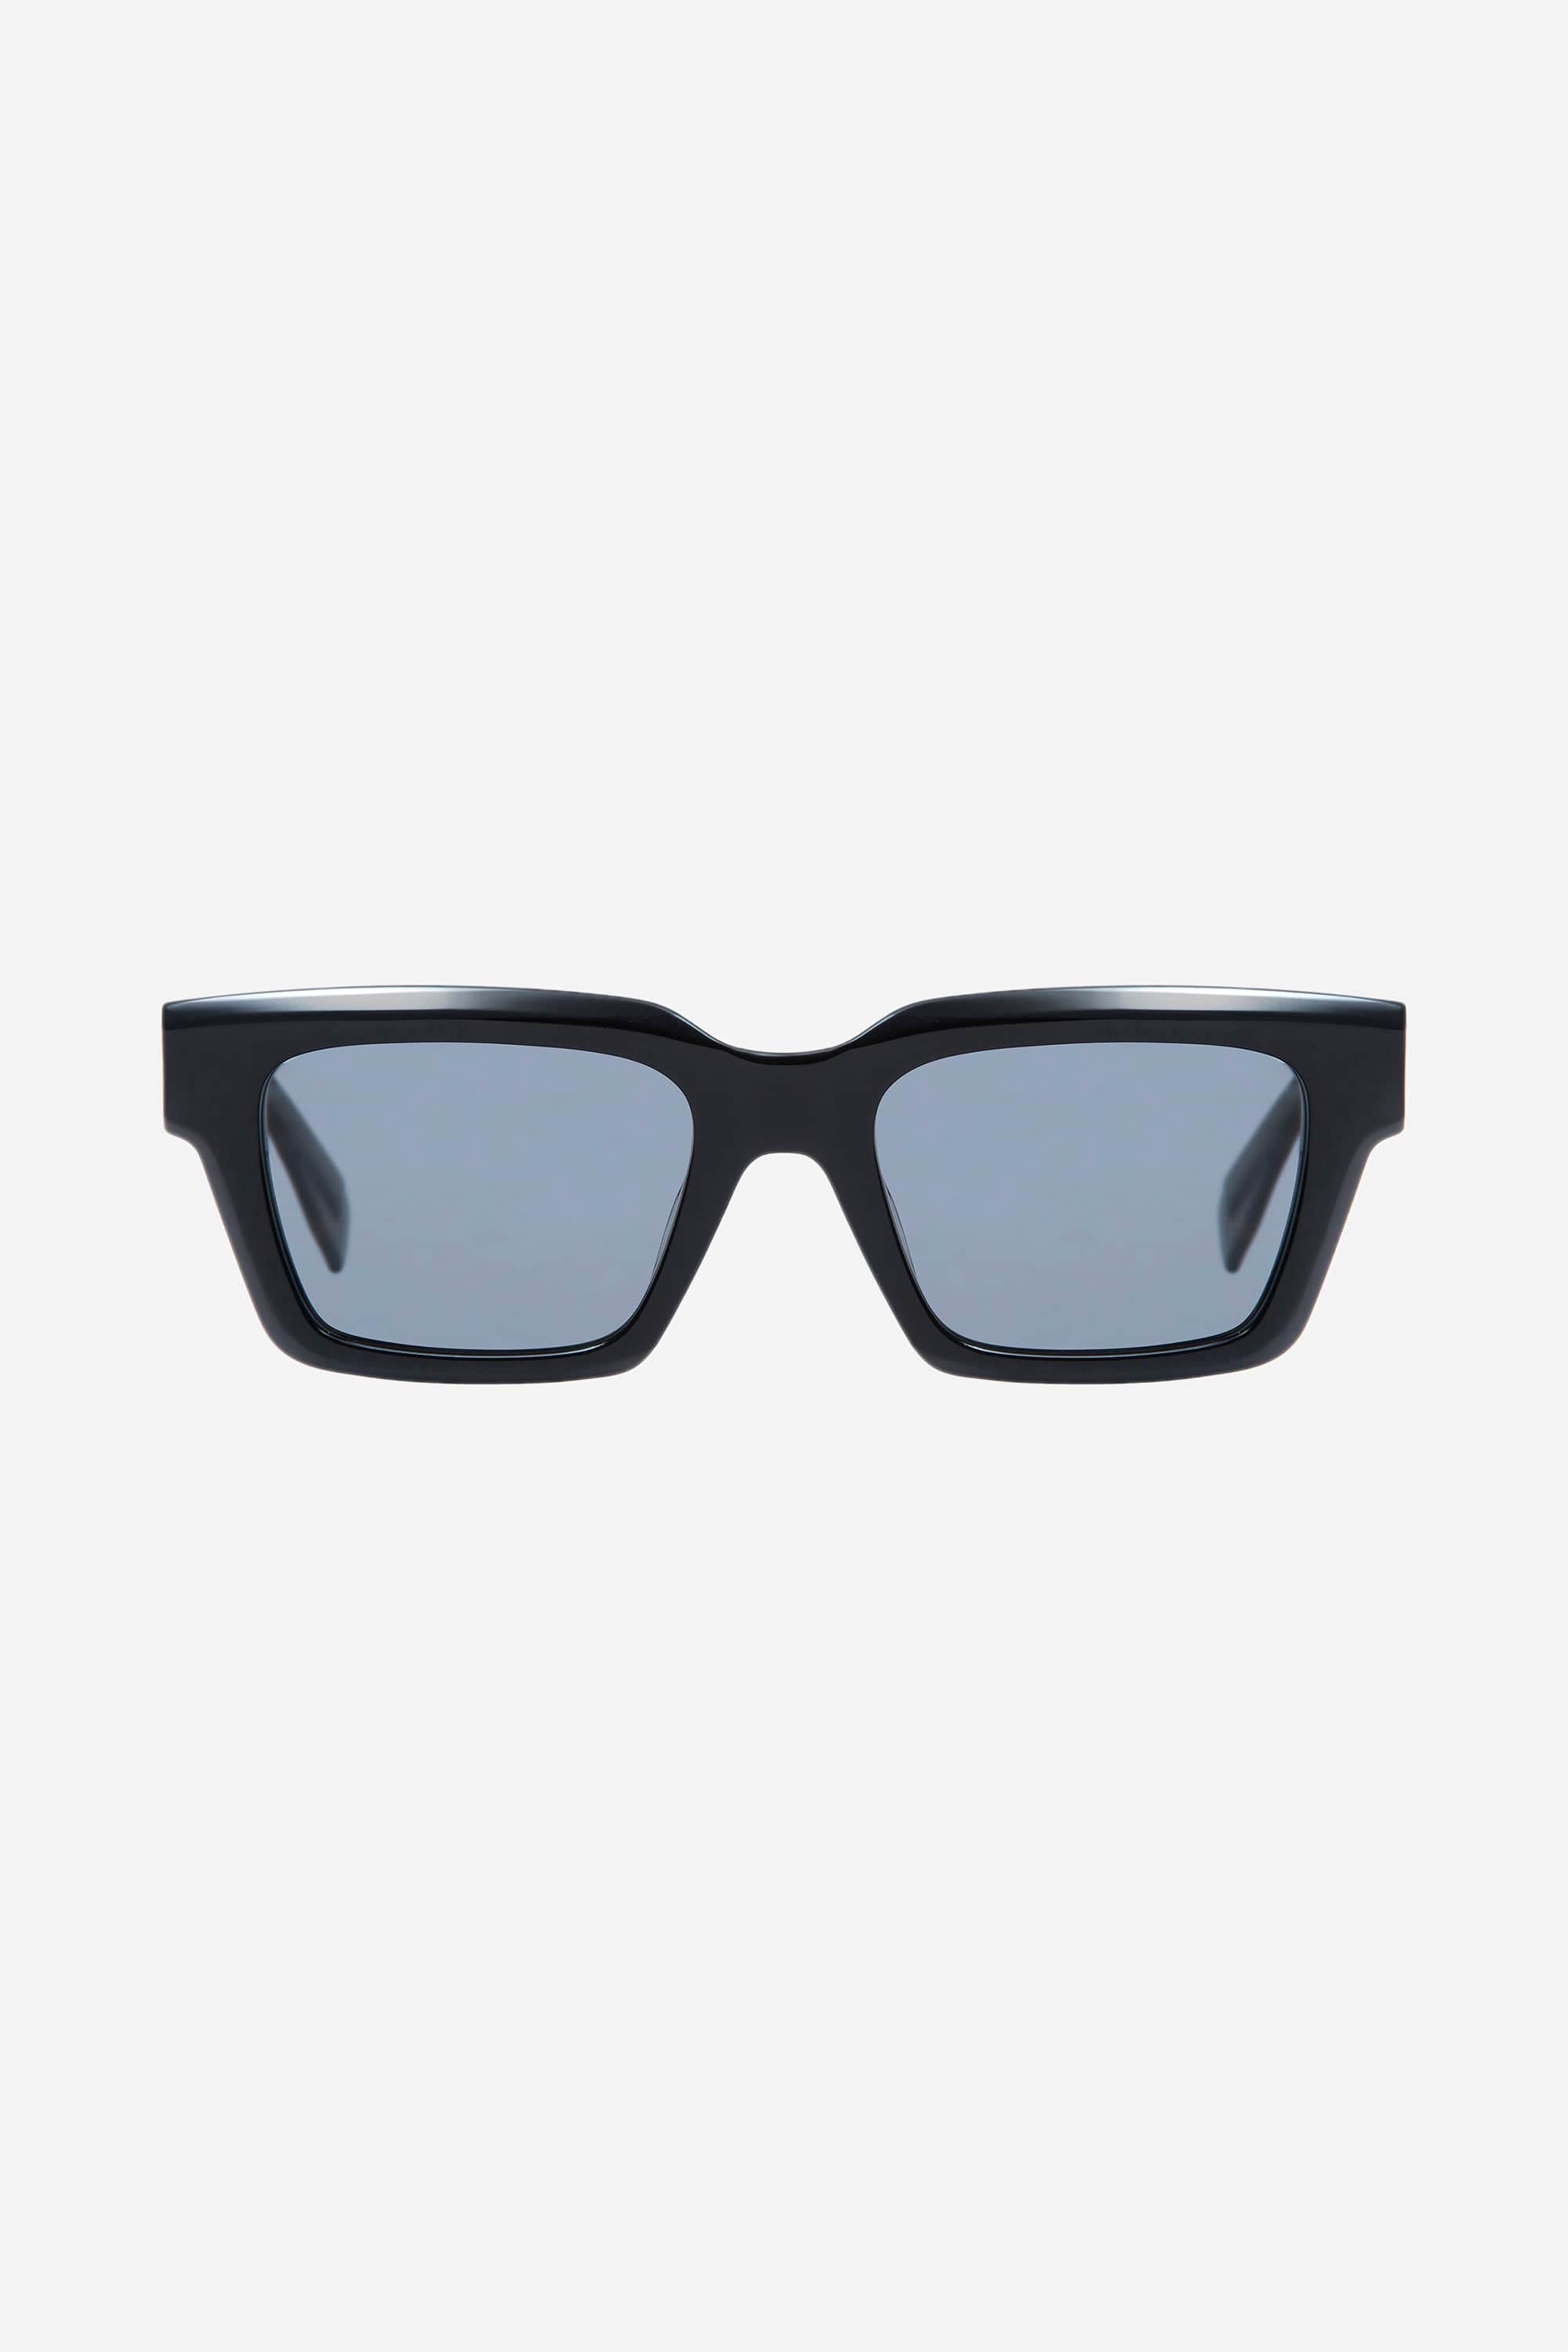 Gigi Studios squared black sunglasses - Eyewear Club